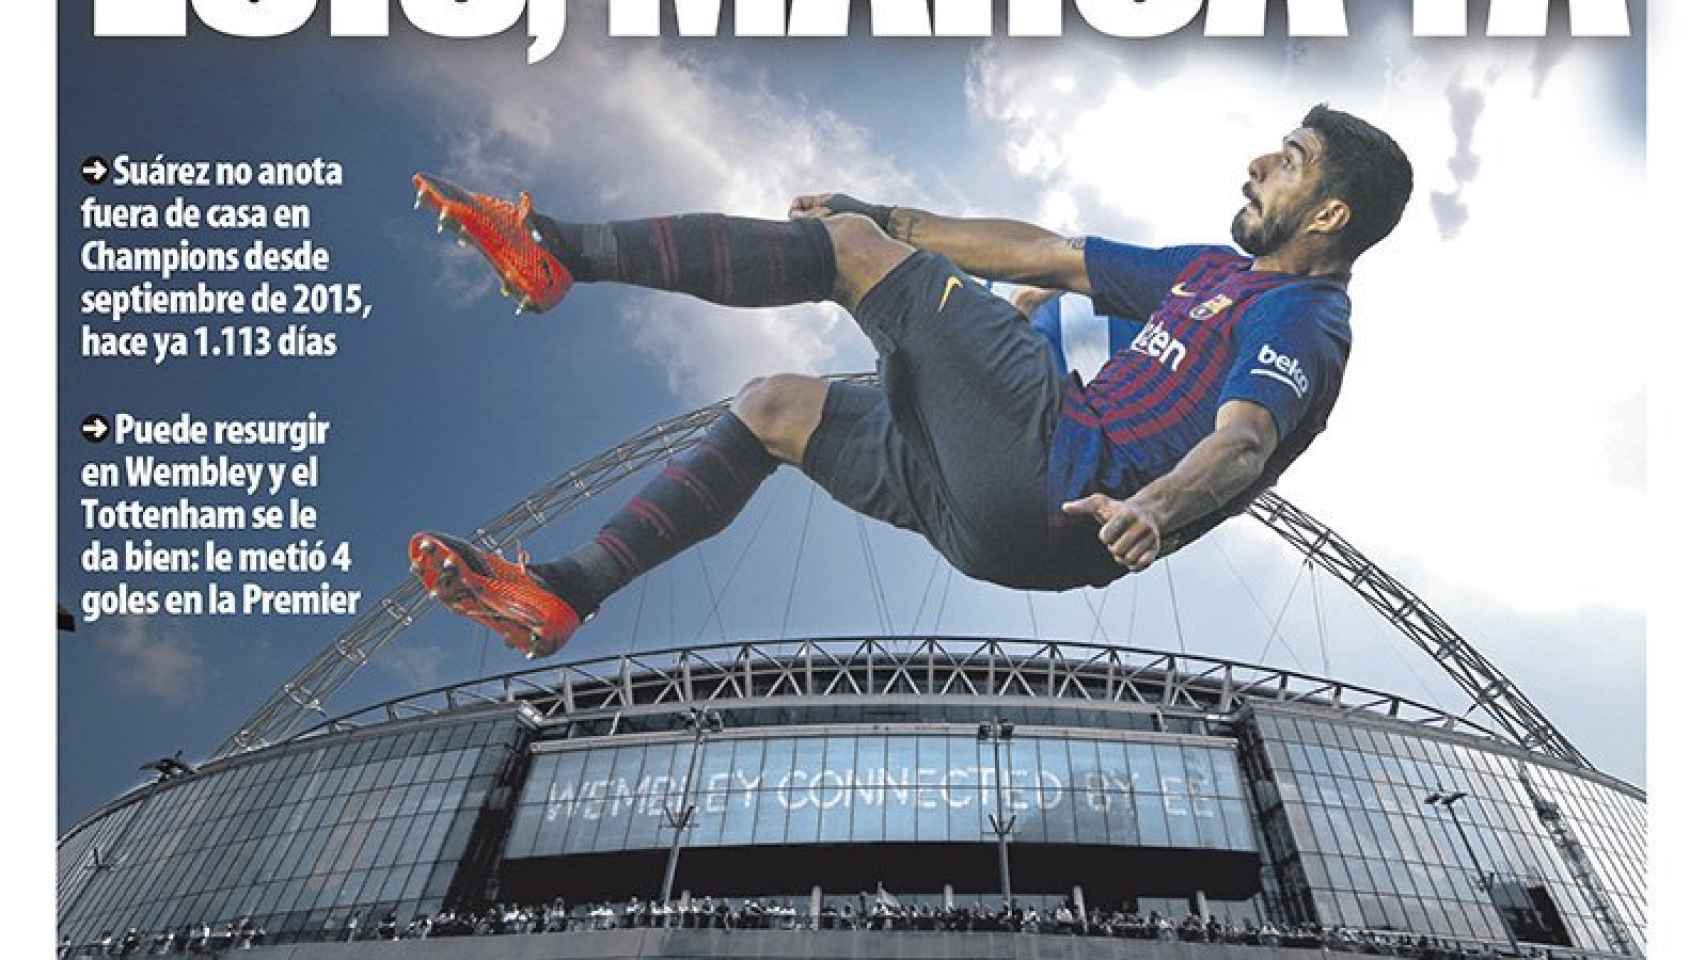 La portada del diario Mundo Deportivo (02/10/2018)1706 x 960